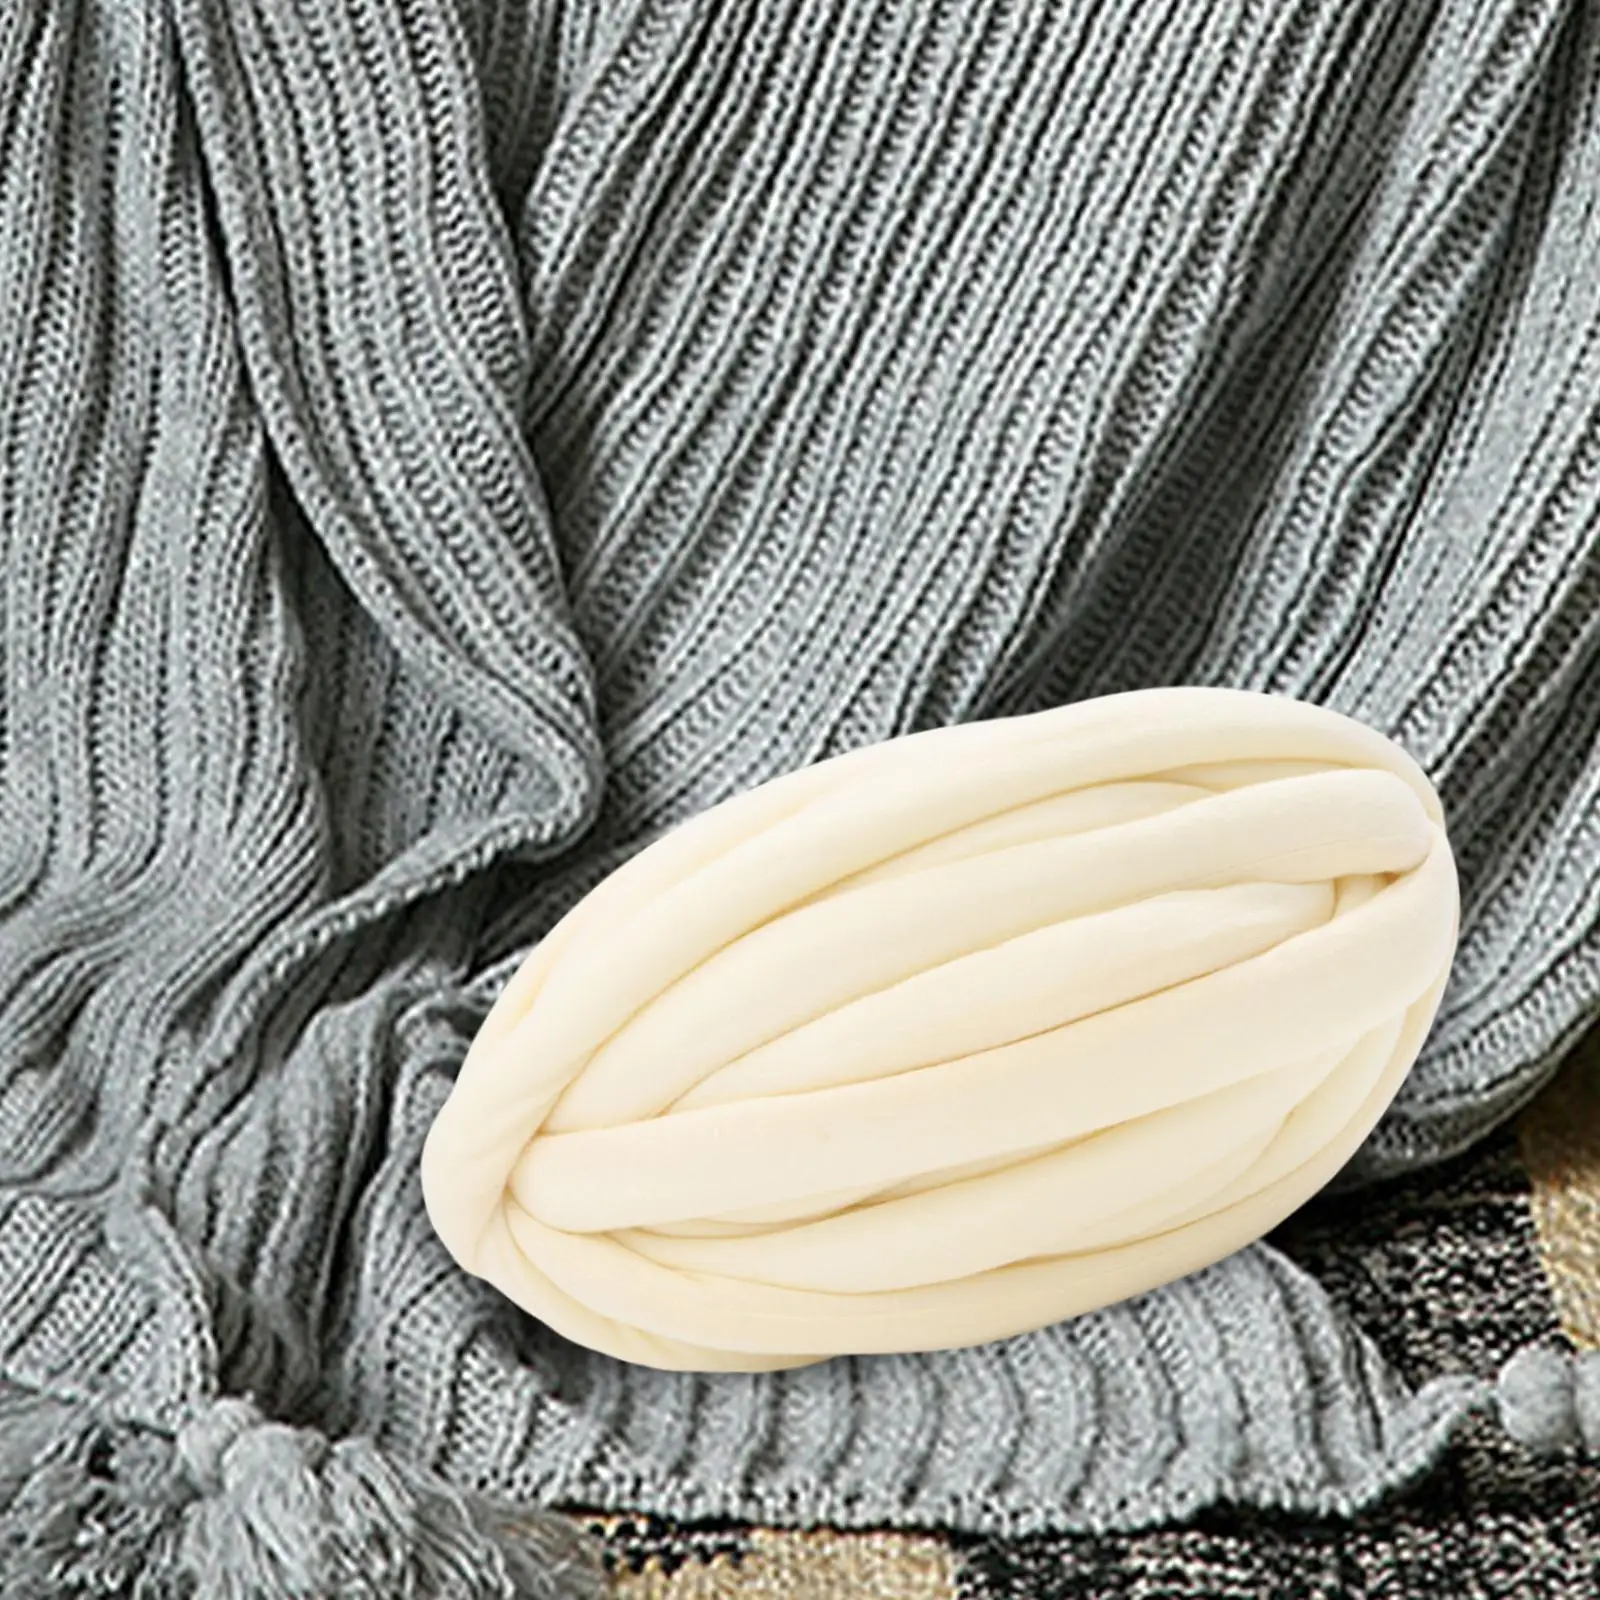 Thick chunky yarn, super bulky giant wool yarn, knitting threads,